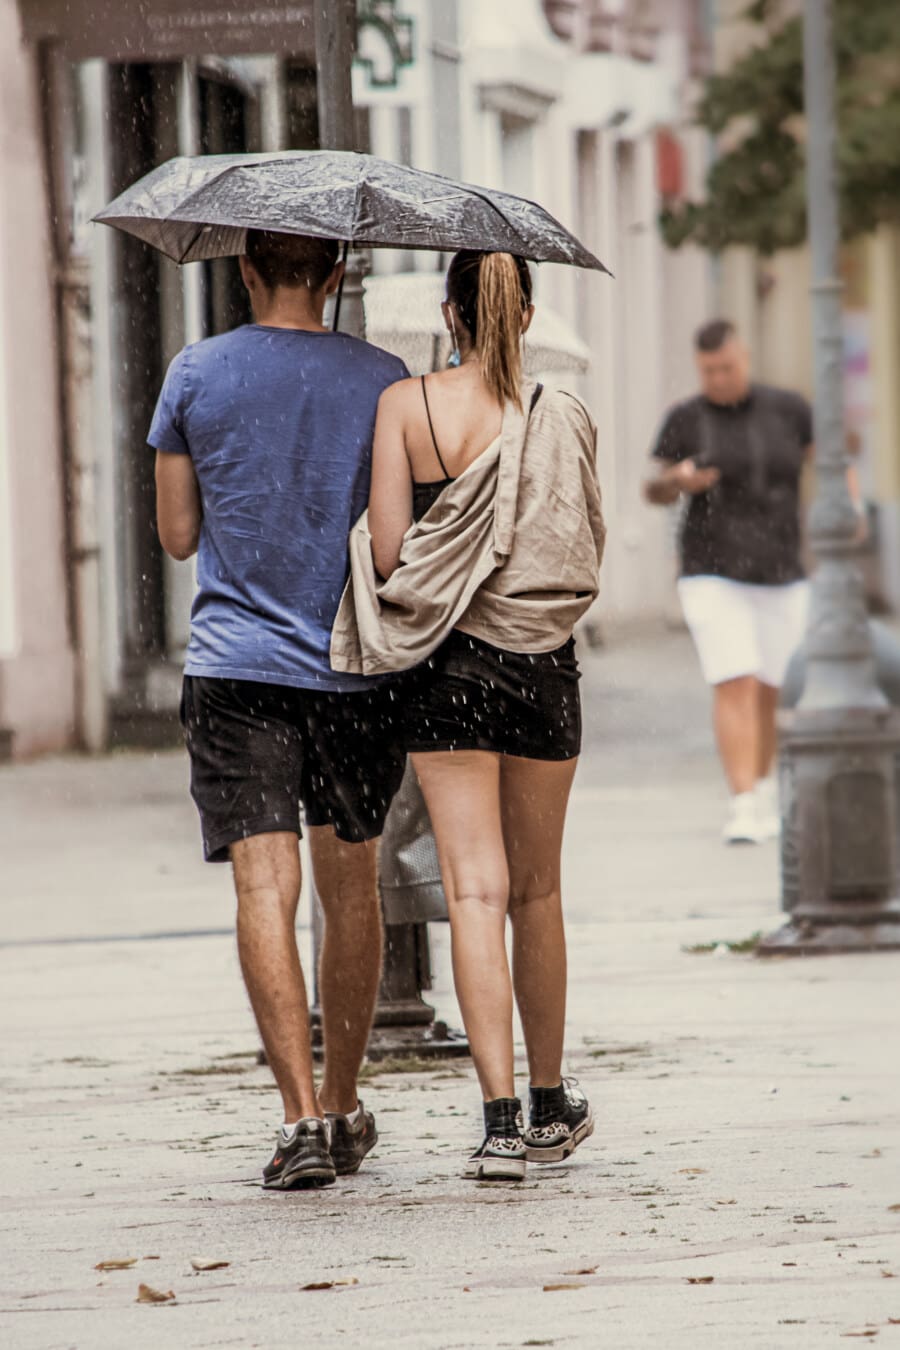 girlfriend, rain, boyfriend, walking, umbrella, romantic, street, woman, girl, skirt